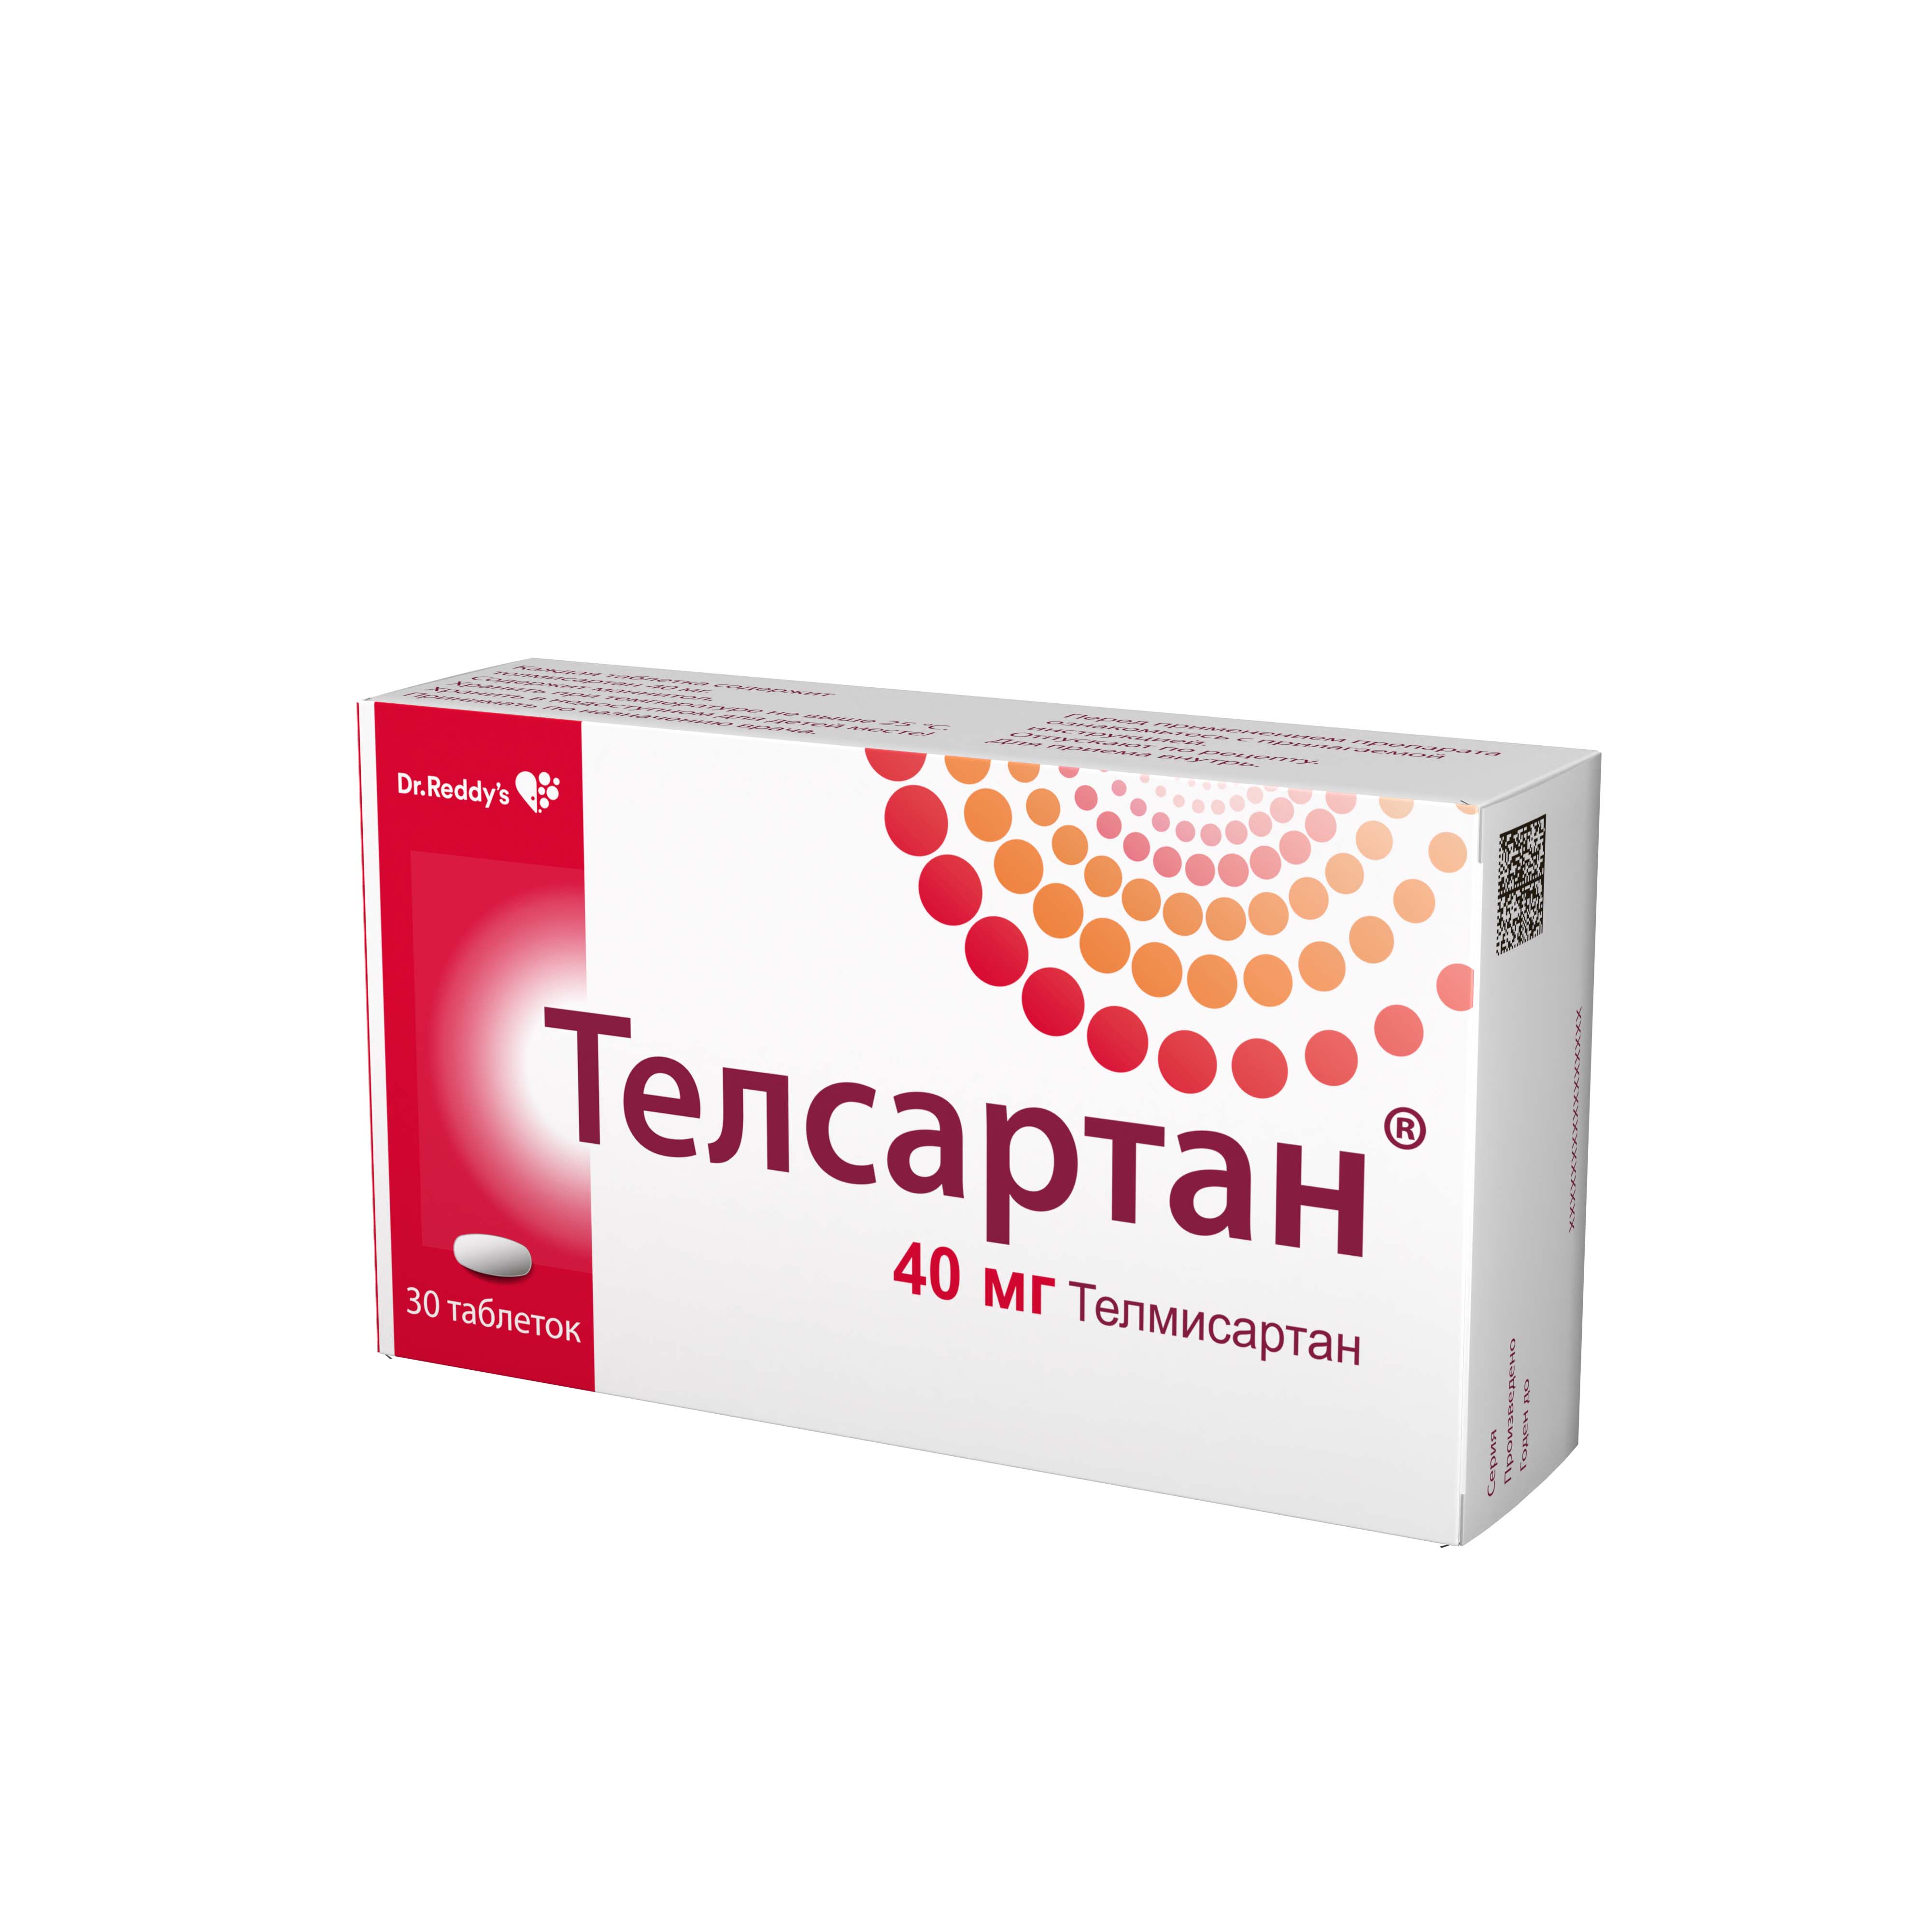 Телсартан Таблетки 40 мг 30 шт  по цене 317,0 руб в интернет .